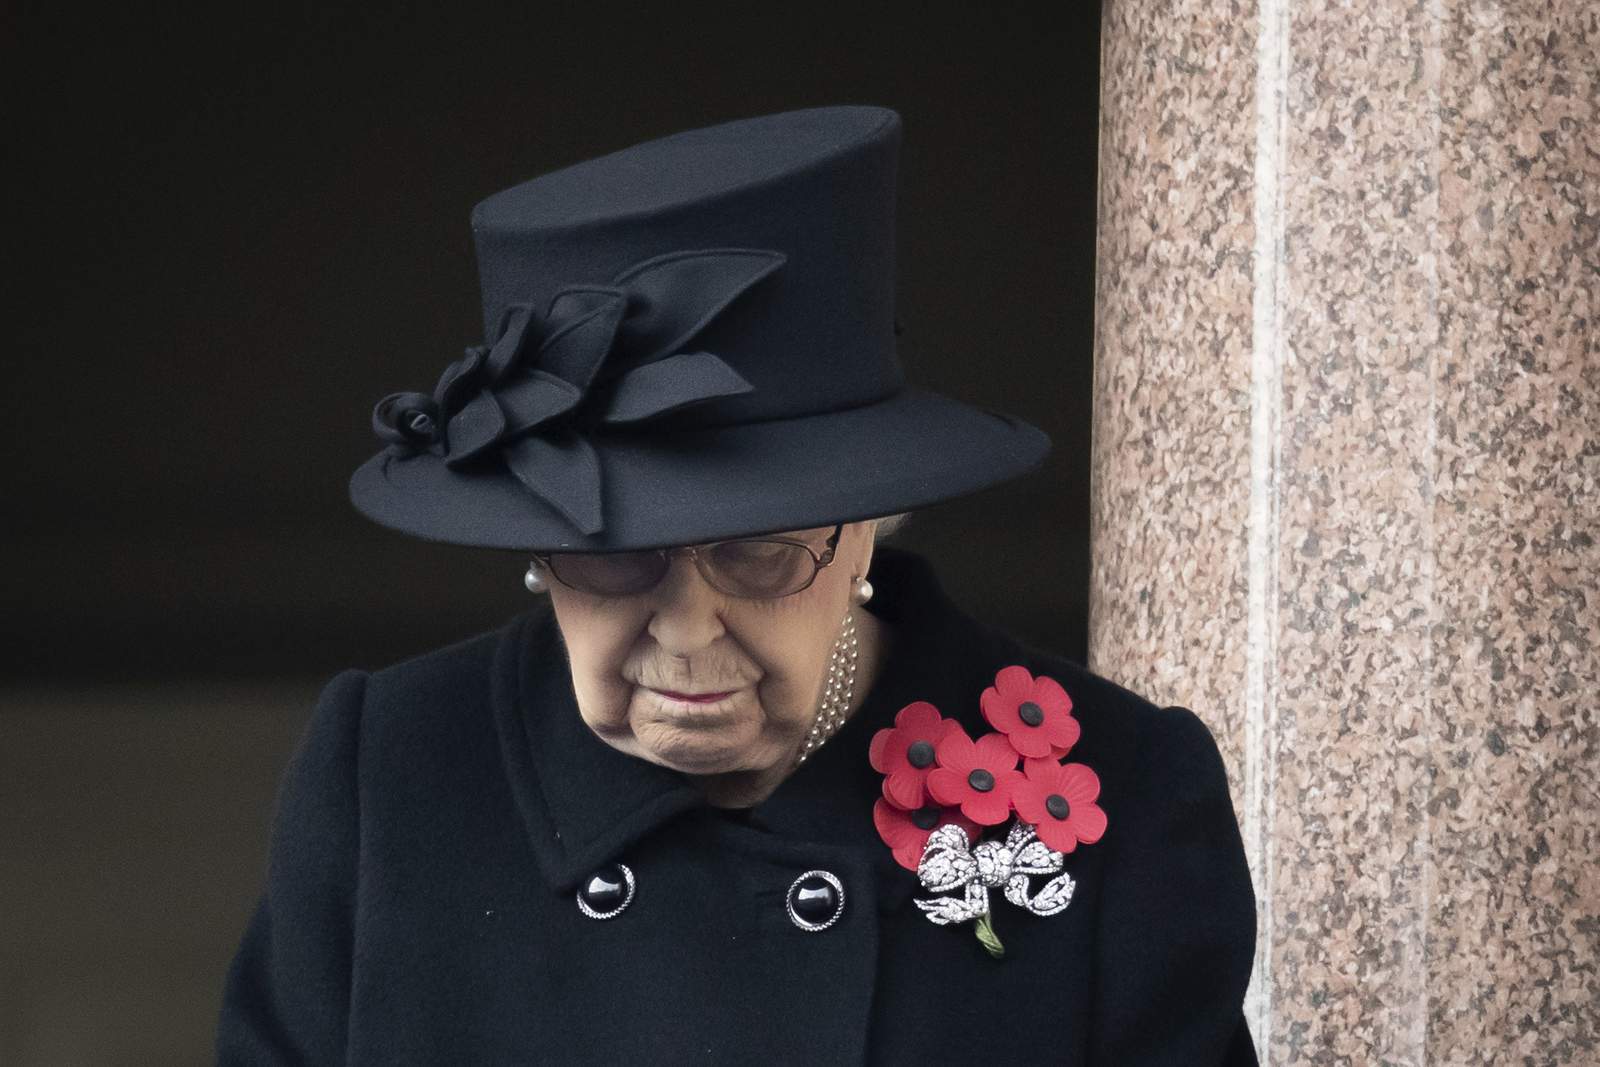 British queen offers condolences to Eta storm victims